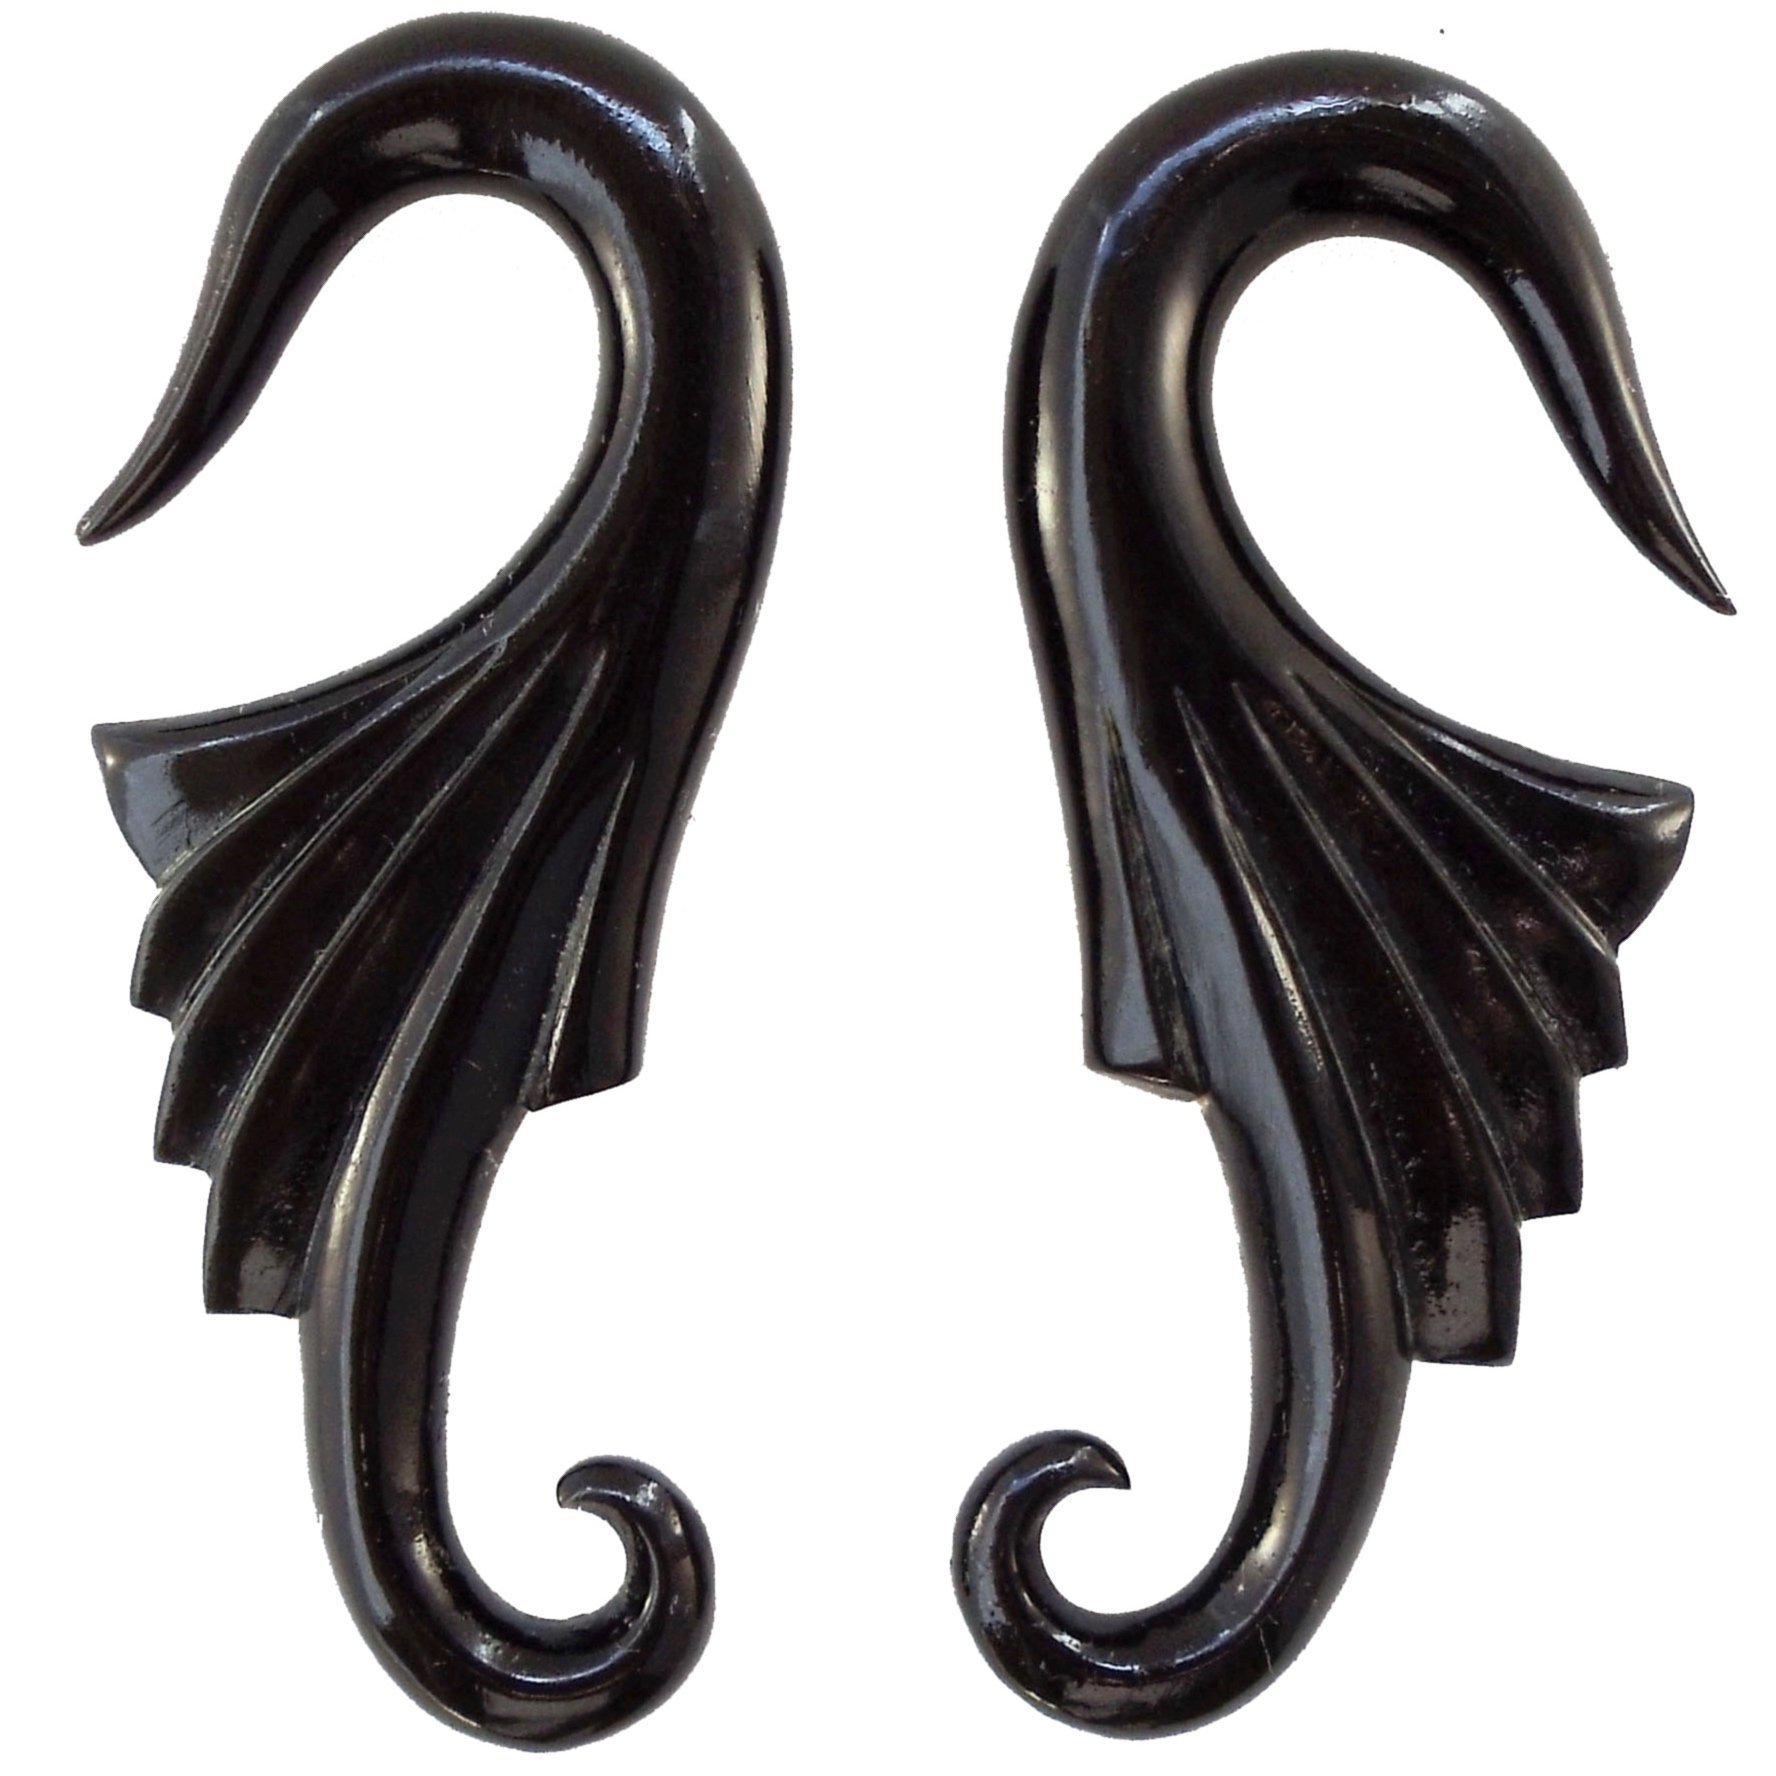 Organic Body Jewelry :|: Nouveau Wings. Horn 2g, Organic Body Jewelry. | Gauges